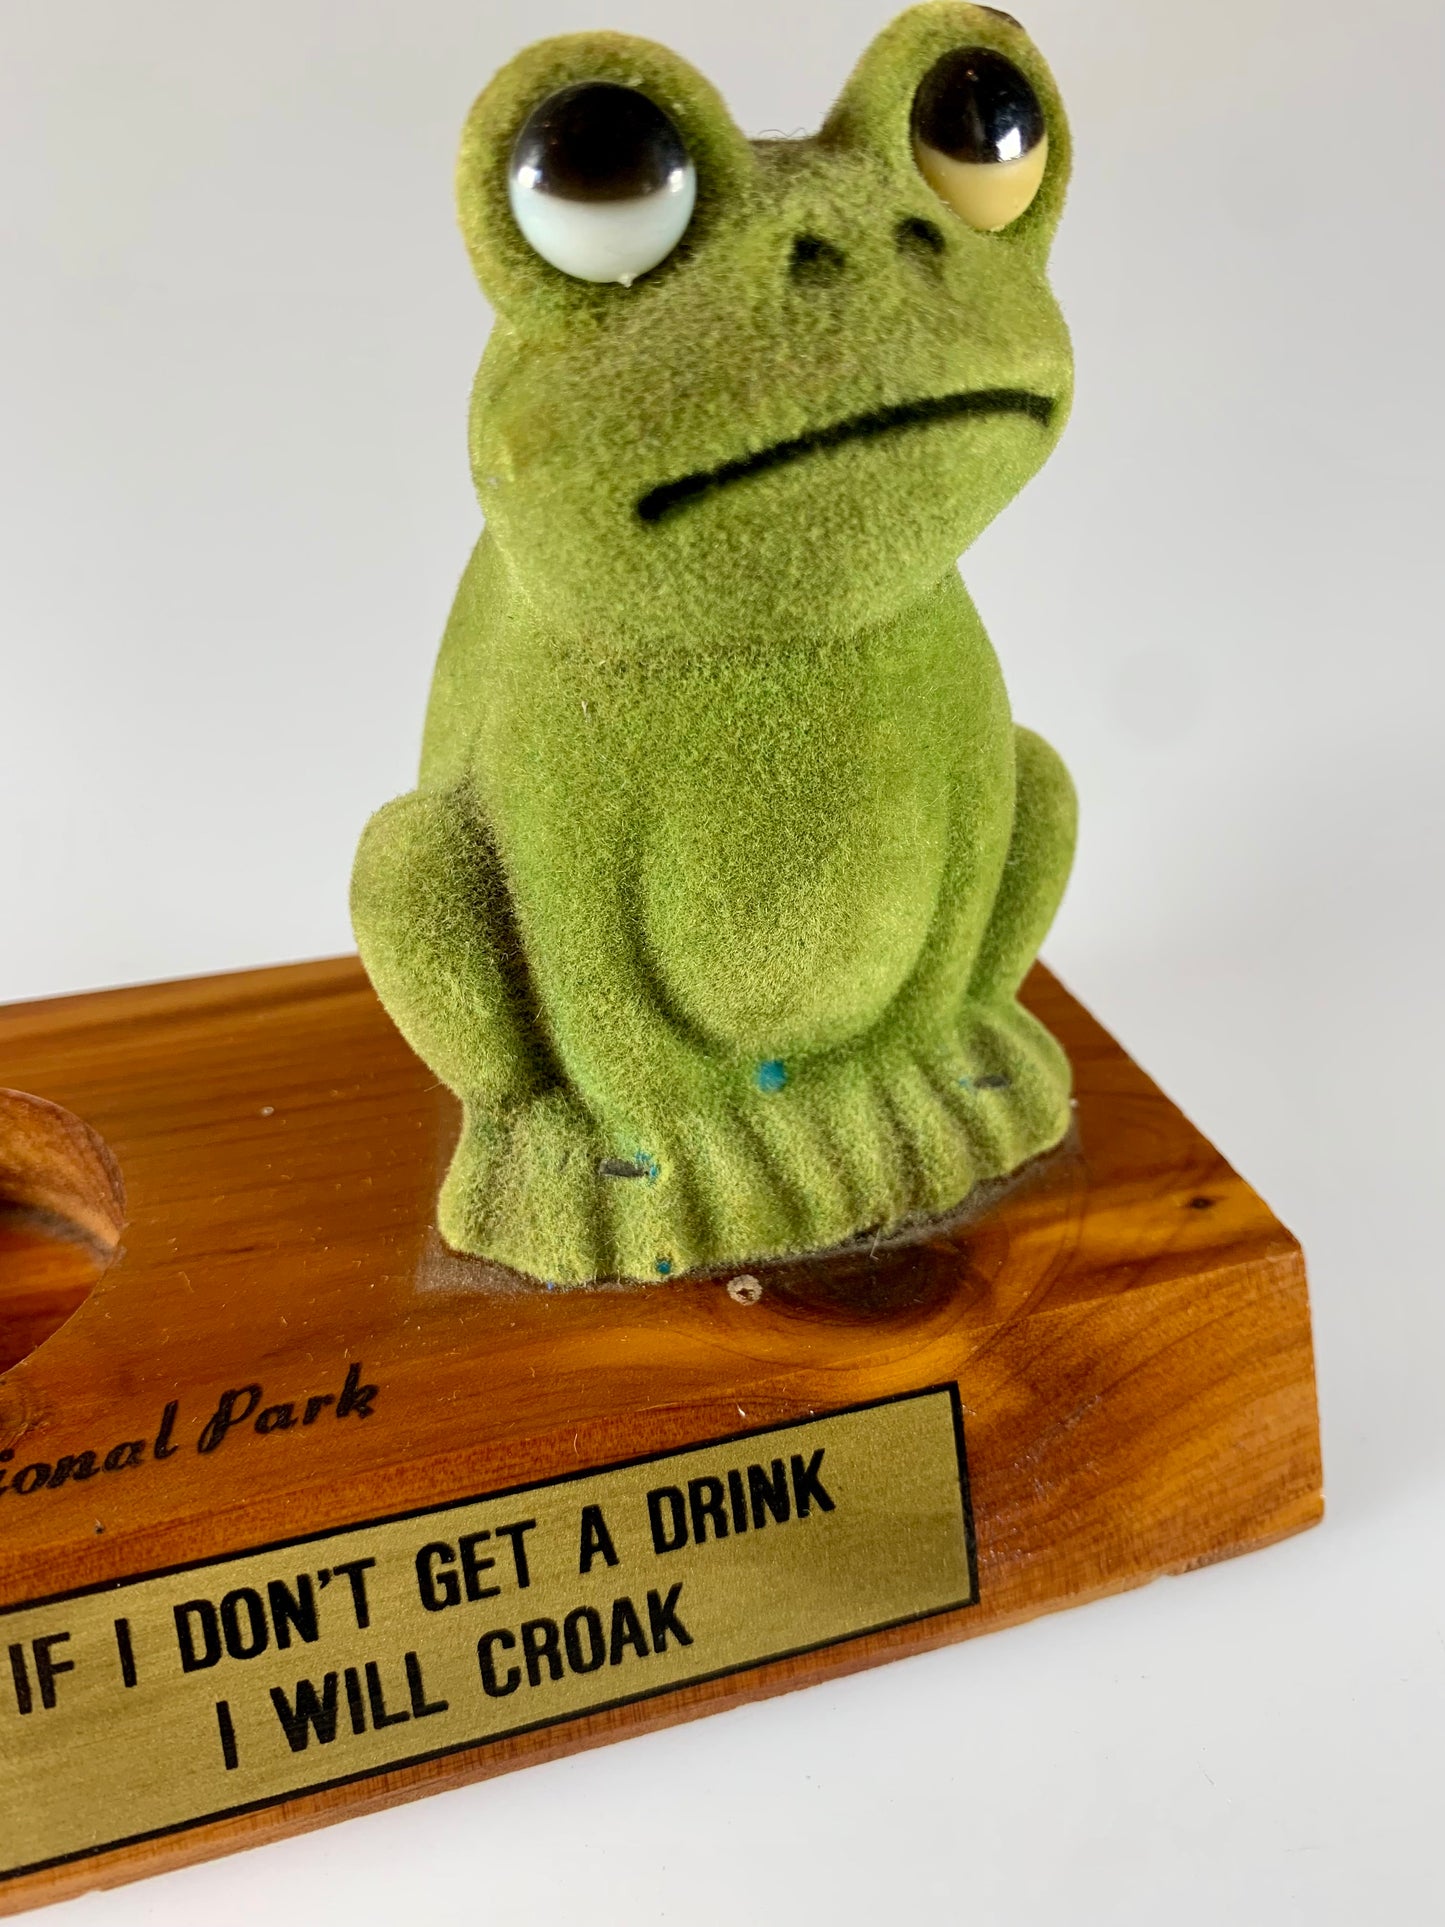 Vintage Yellowstone Souvenir Shot Glass Holder w/ Frog - If I Don't Get A Drink I'll Croak